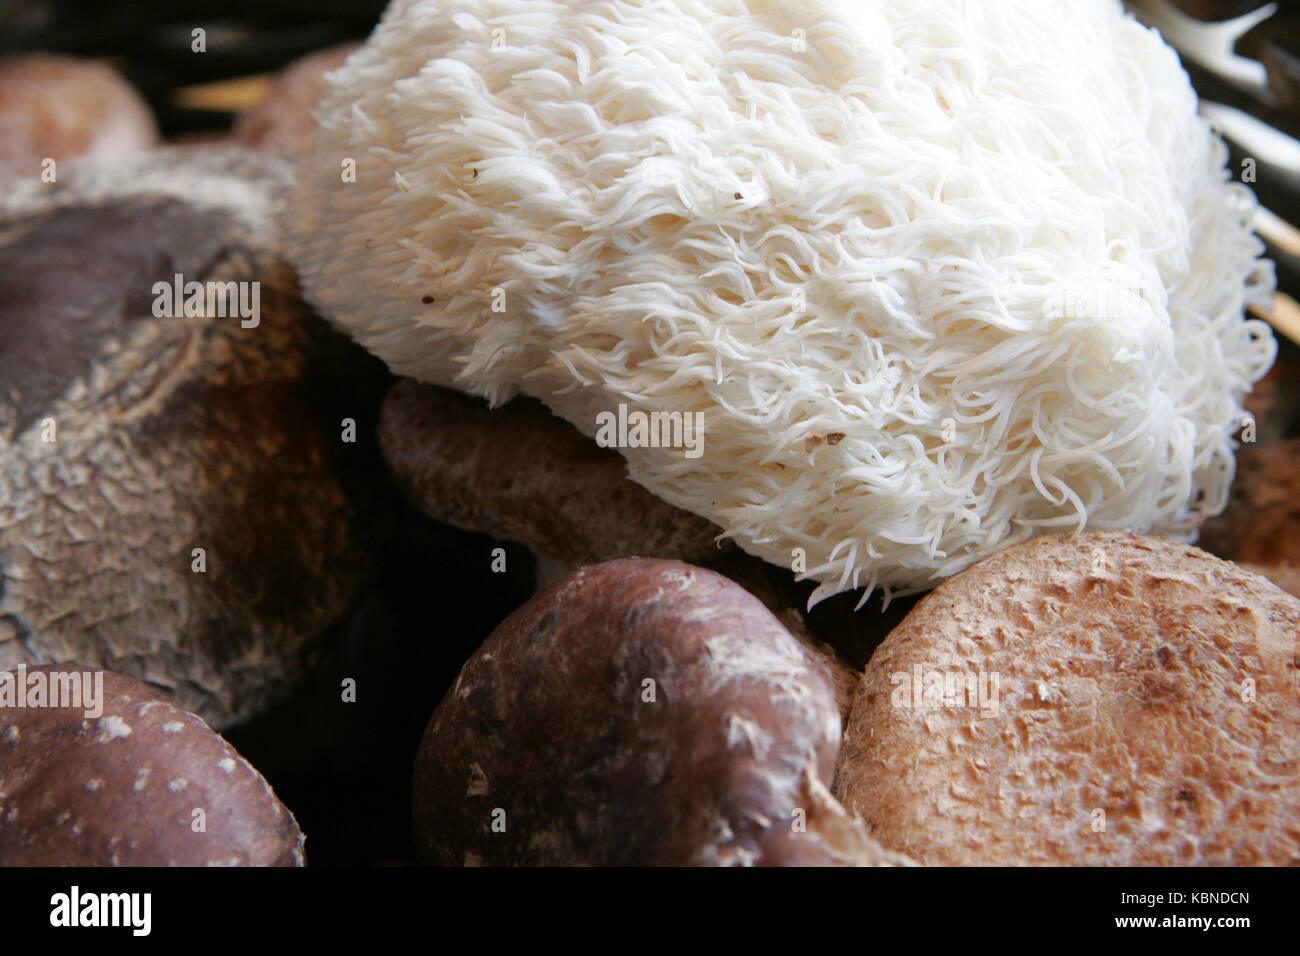 Vari tipi di funghi commestibili Foto Stock